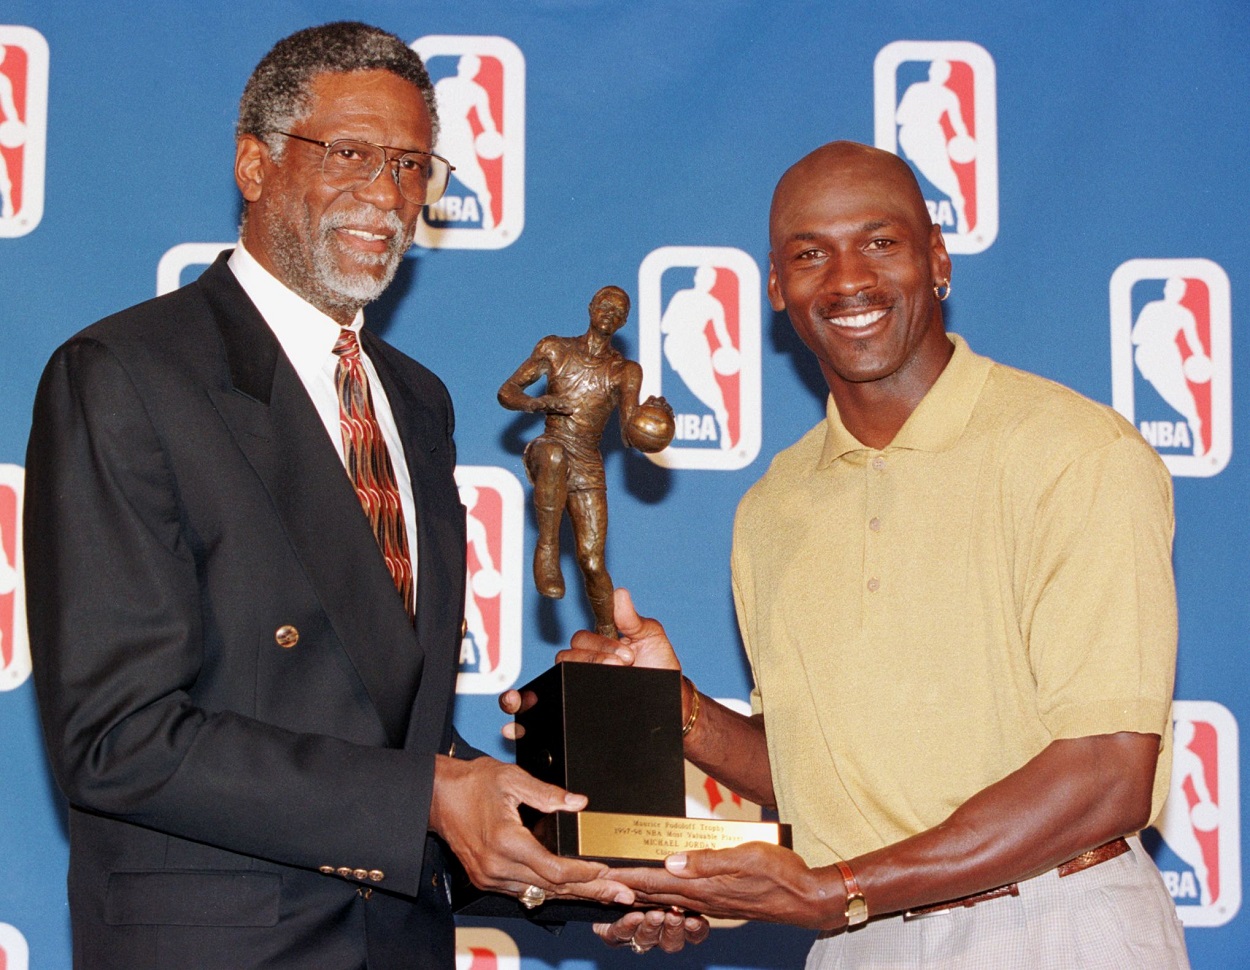 Bill Russell presents Michael Jordan with the NBA MVP award in 1998